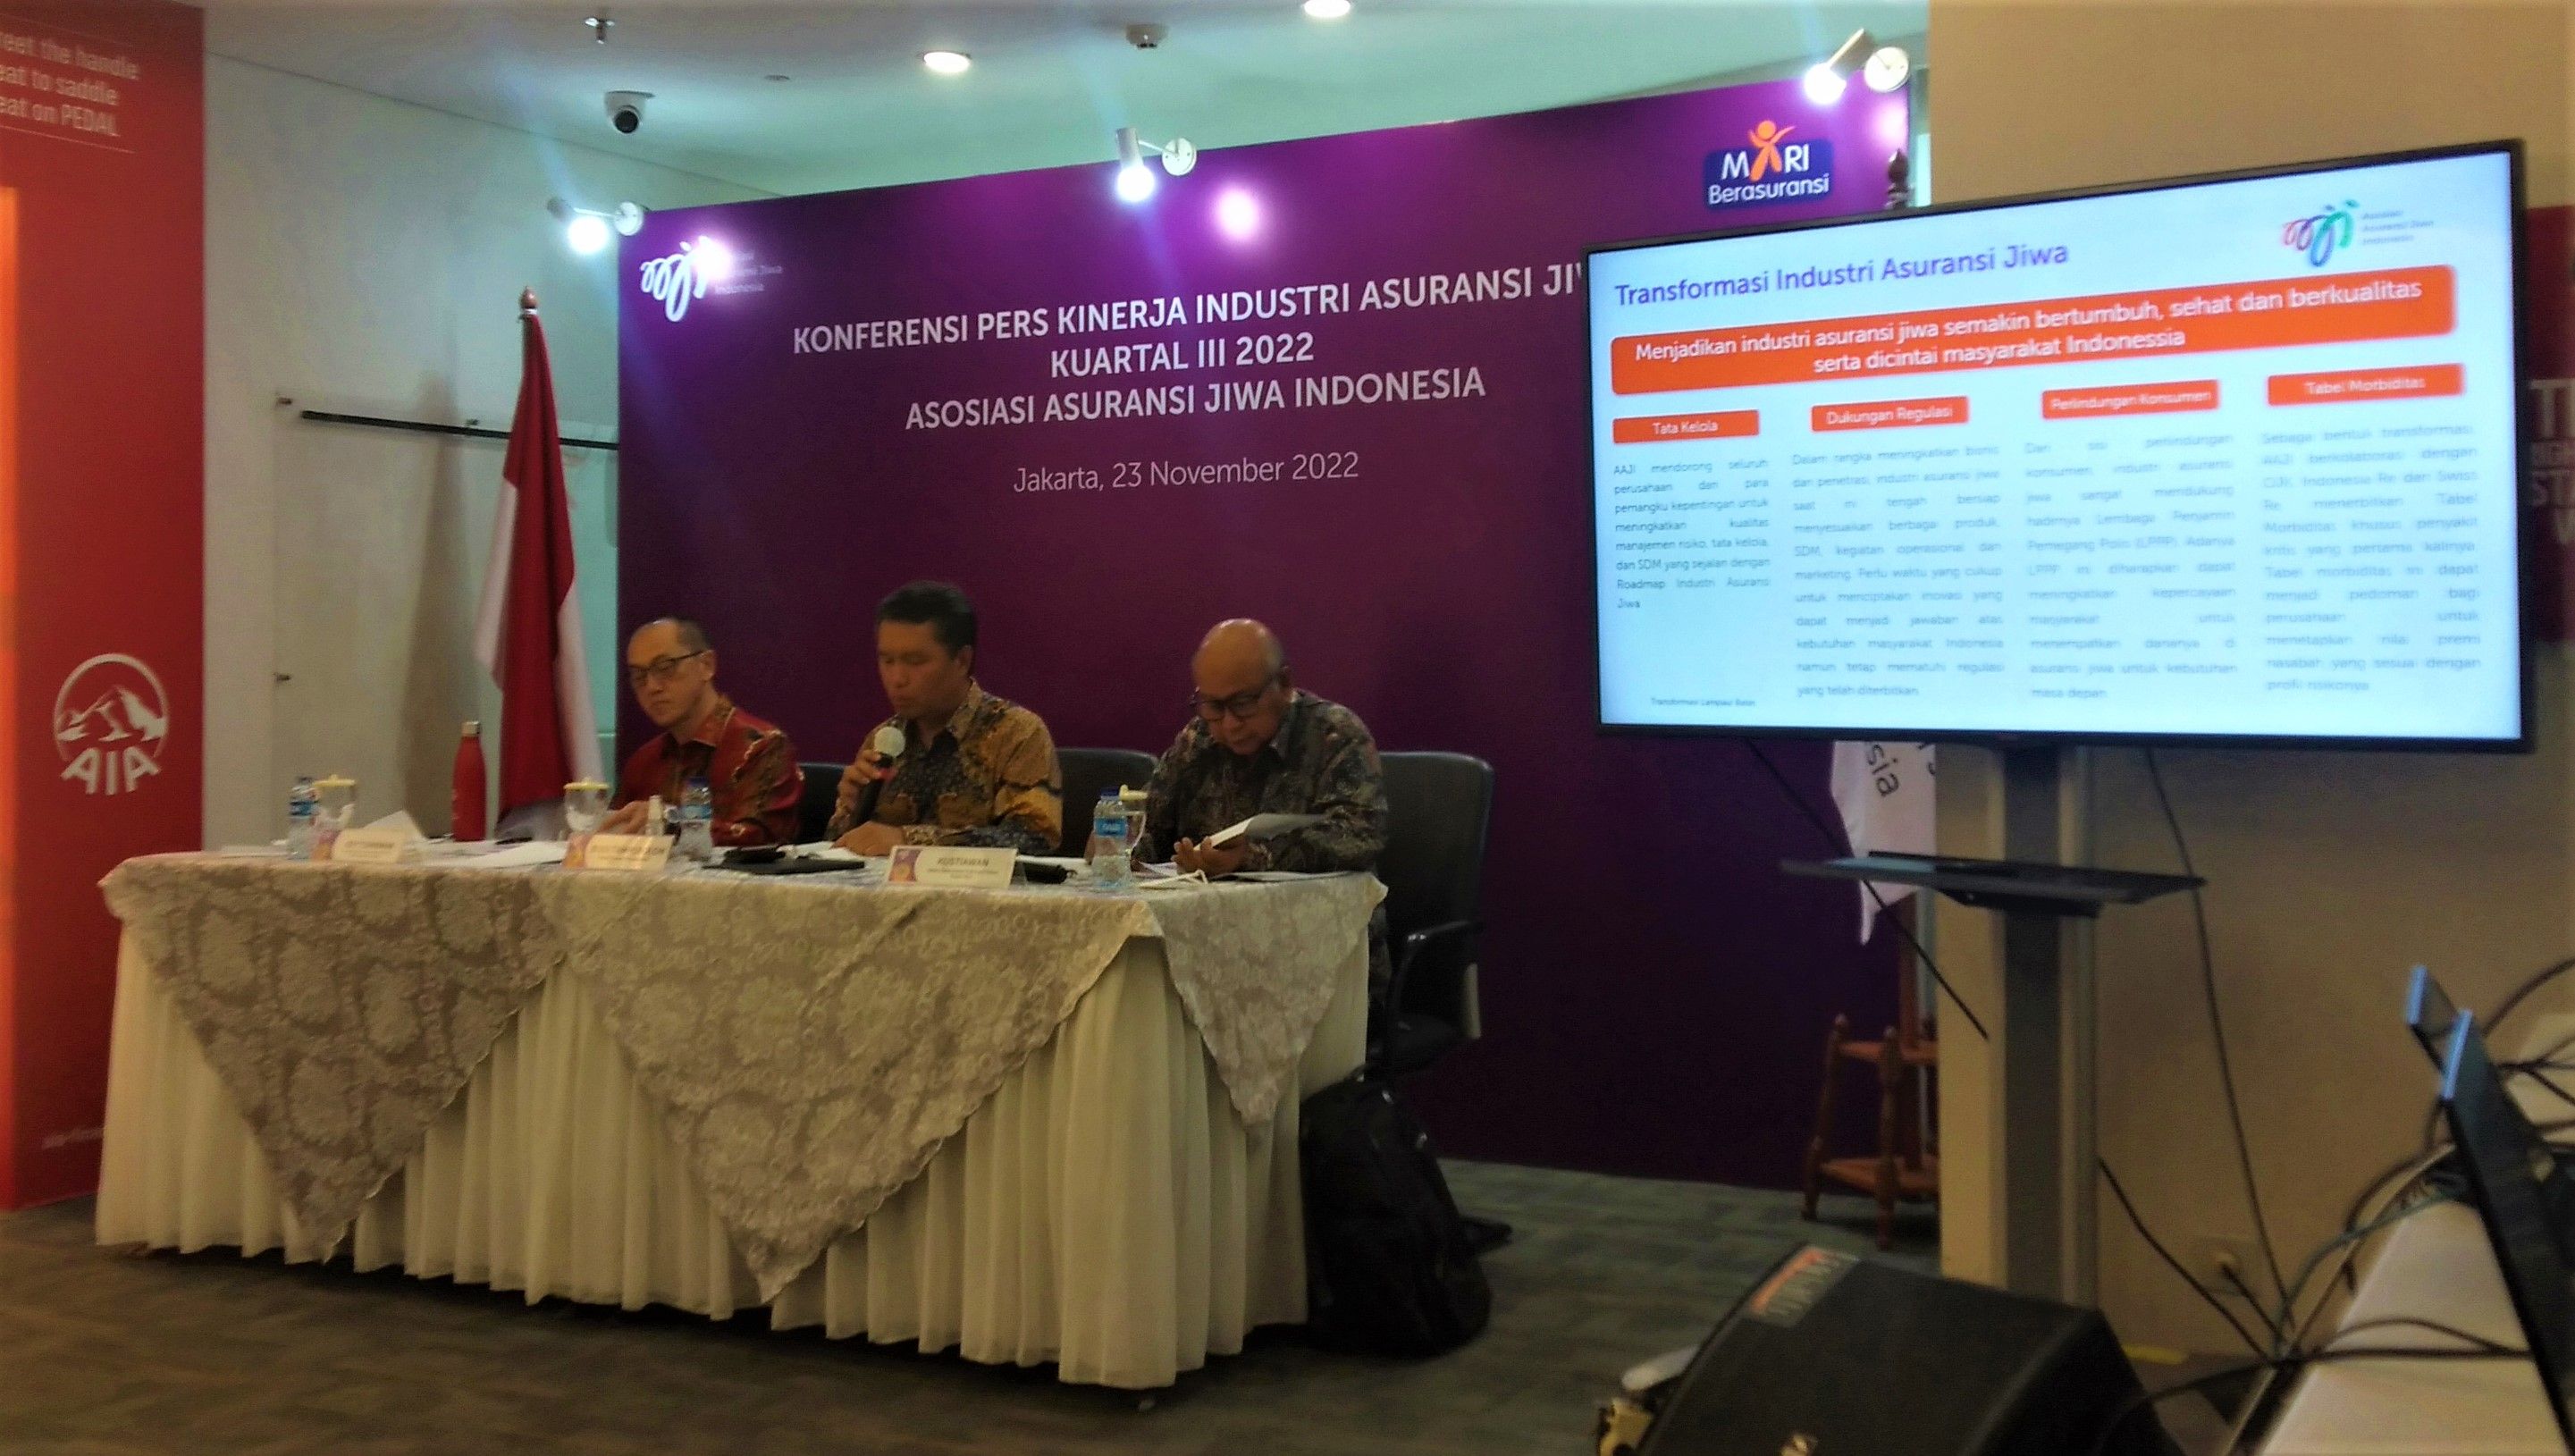 Konferensi Pers Kinerja Kuartal III-2022 Asosiasi Asuransi Jiwa Indonesia (AAJI) di Jakarta, Rabu, 23 November 2022.